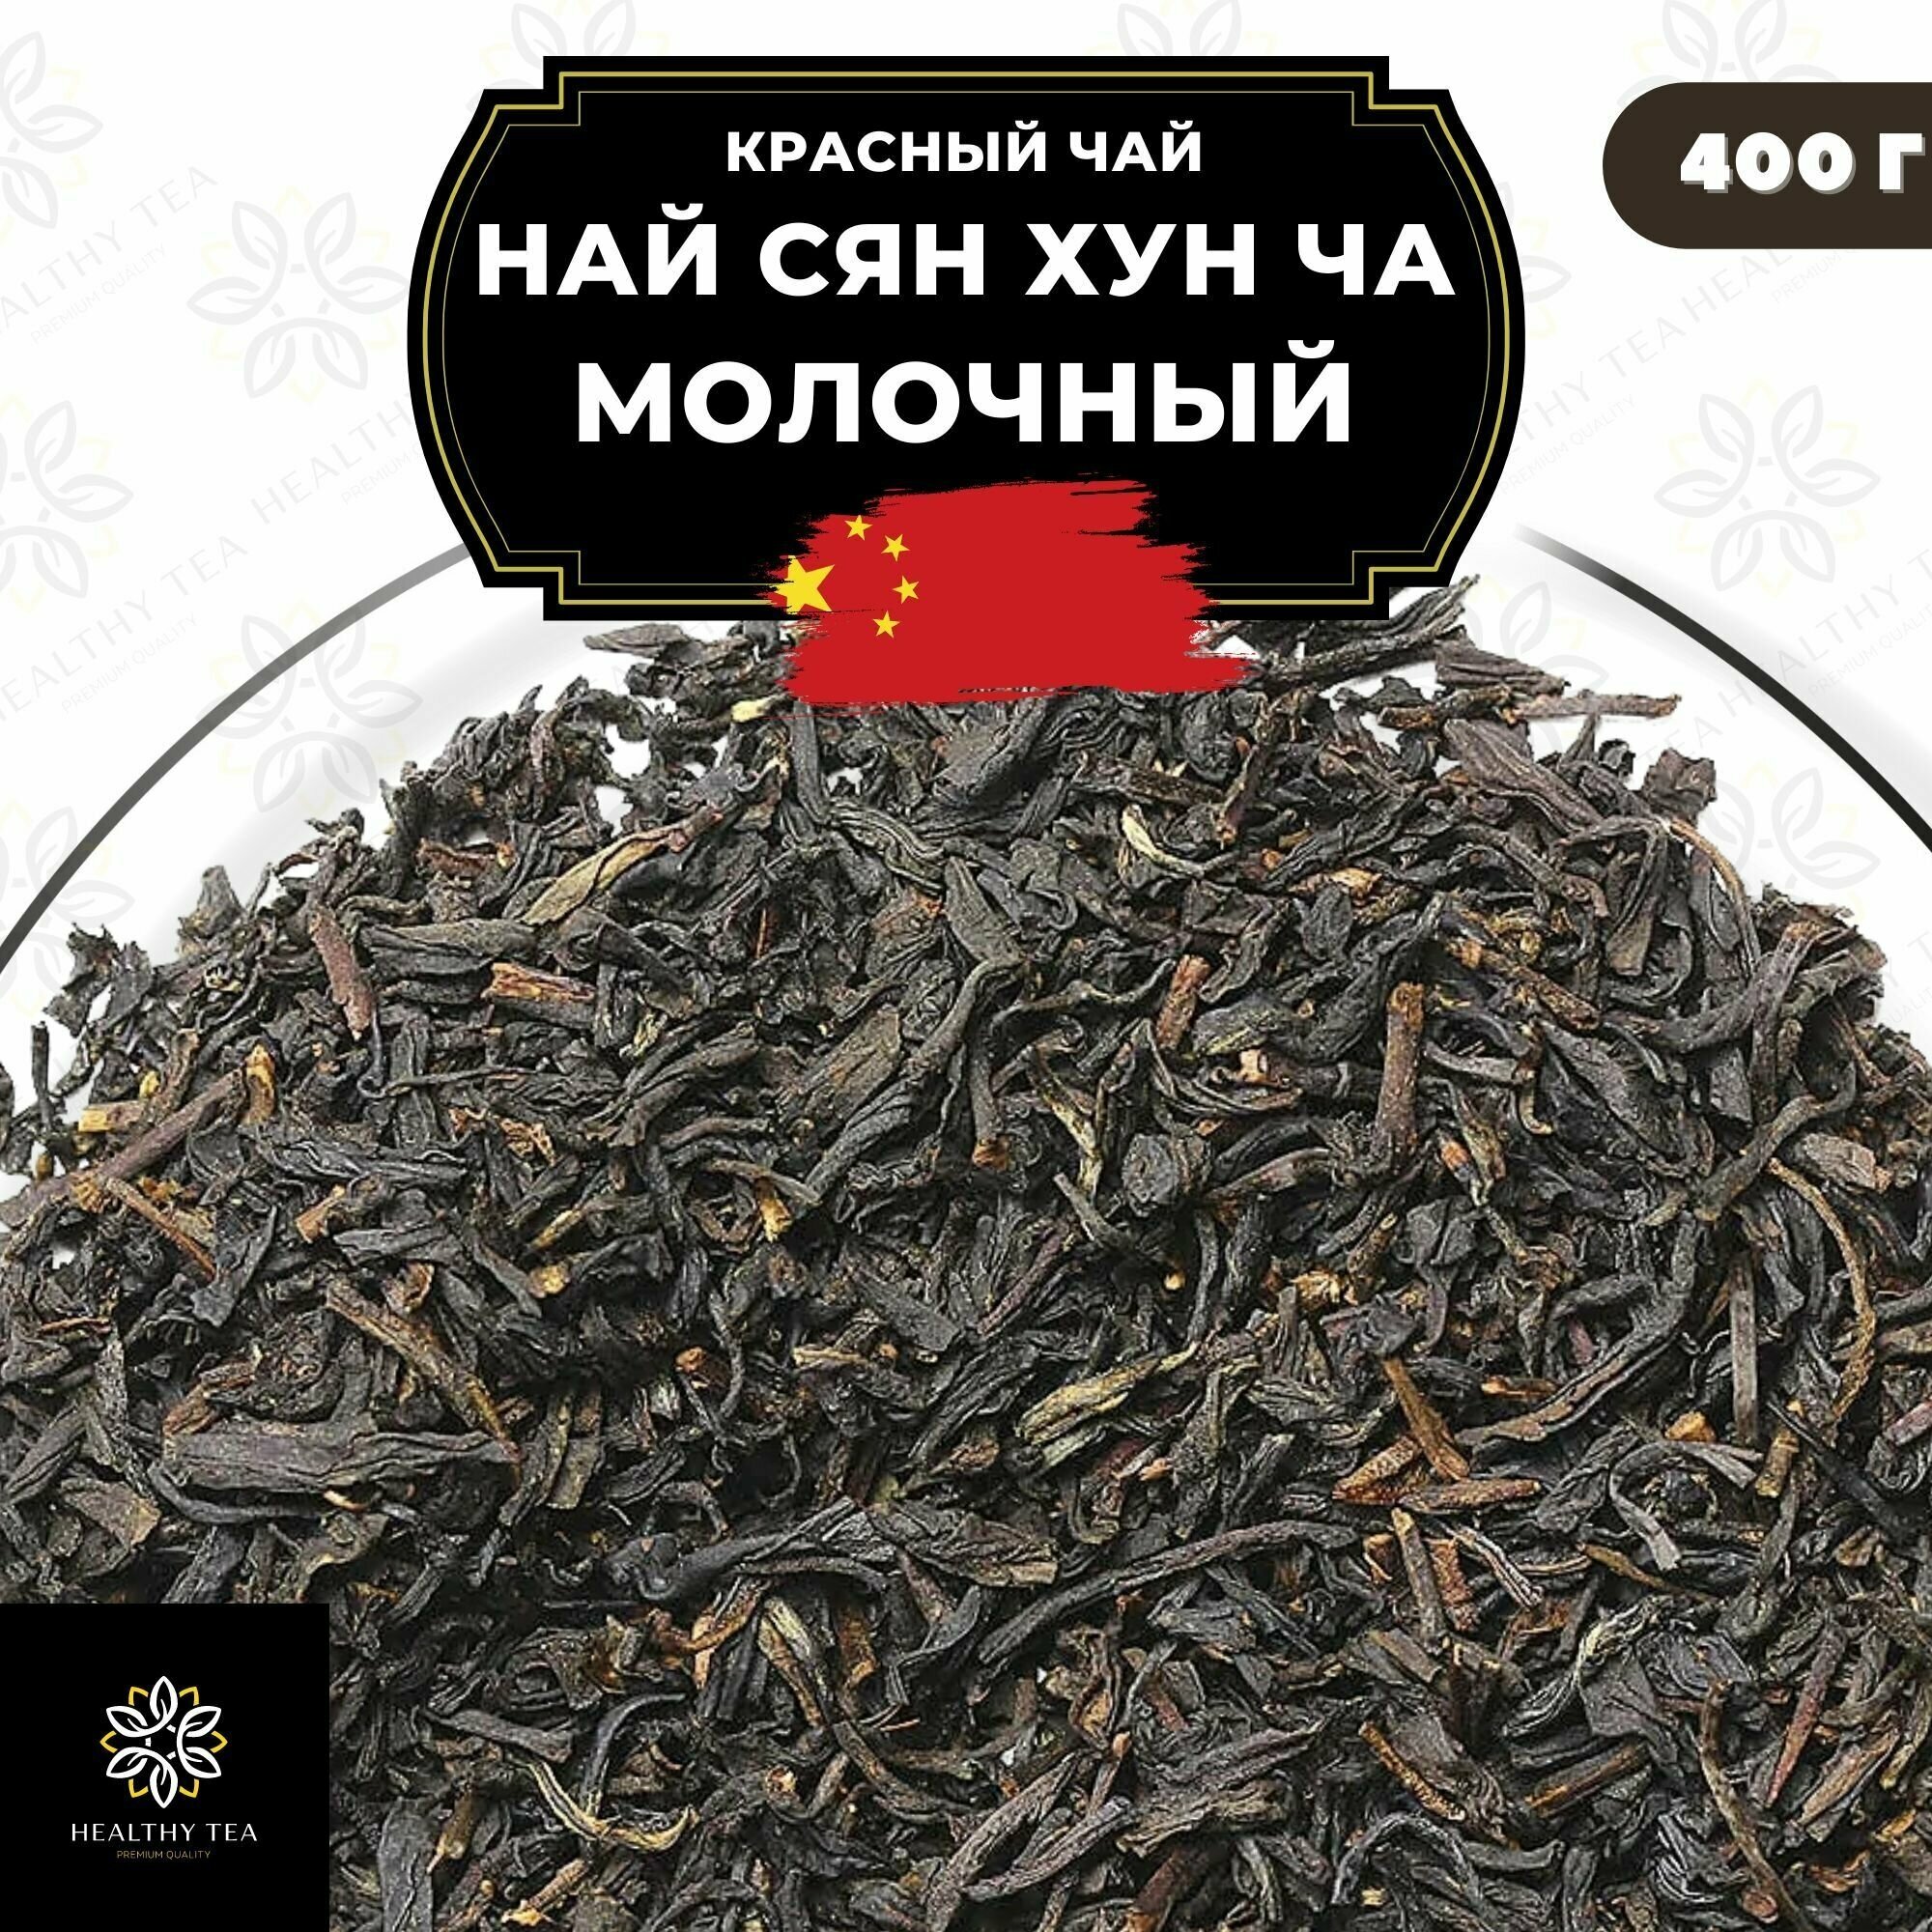 Китайский красный чай Най Сян Хун Ча (Молочный) Полезный чай / HEALTHY TEA, 400 г